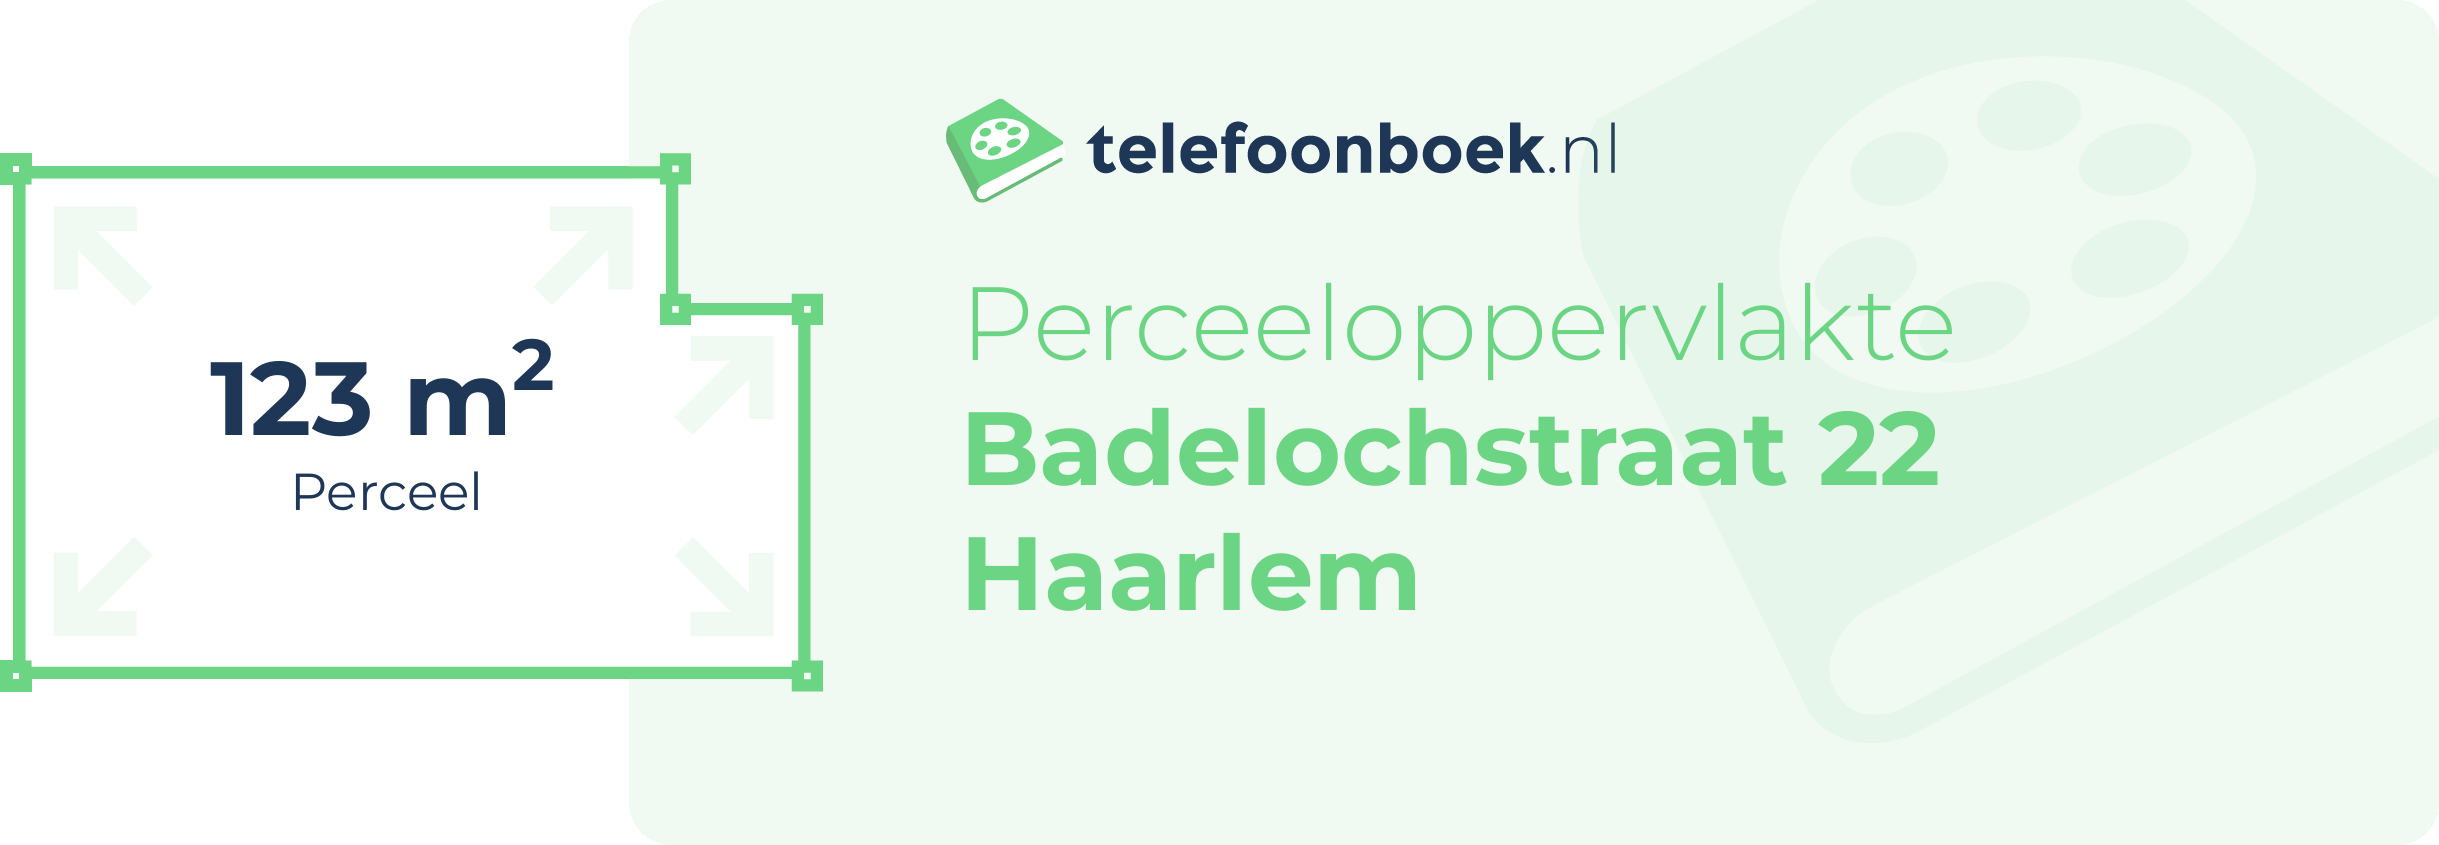 Perceeloppervlakte Badelochstraat 22 Haarlem